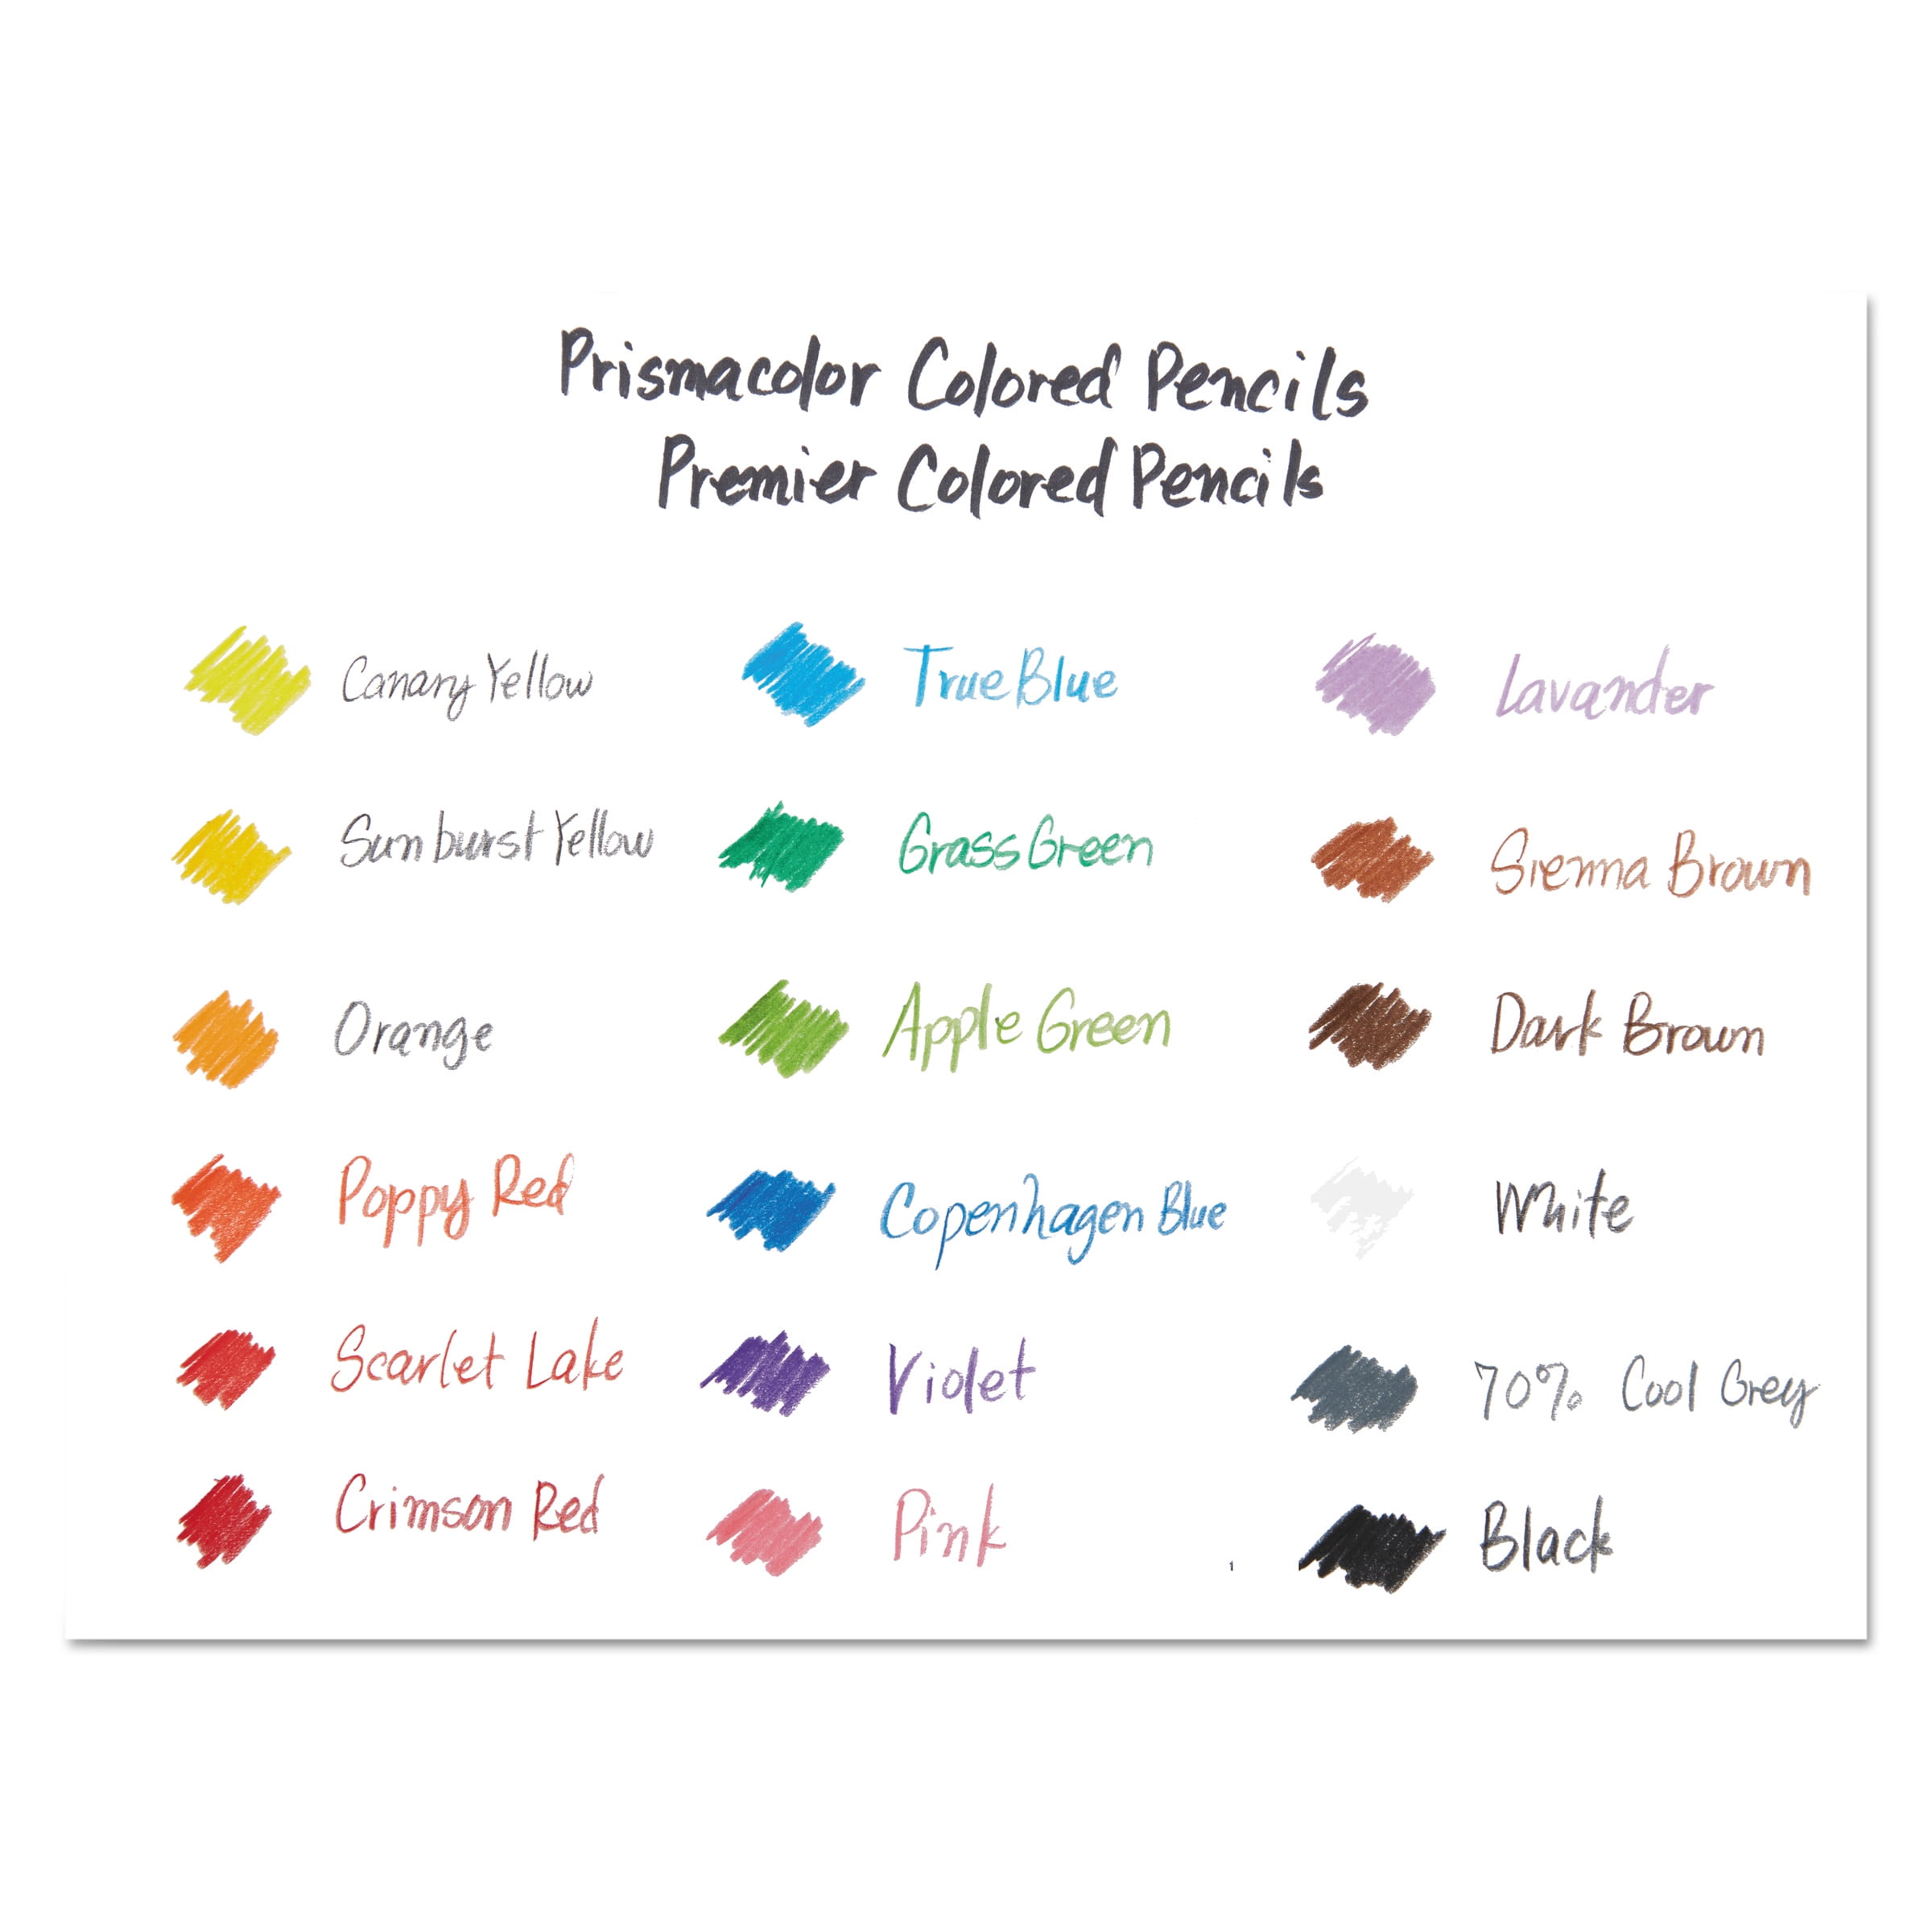 Prismacolor Premier Colored Pencil, White 